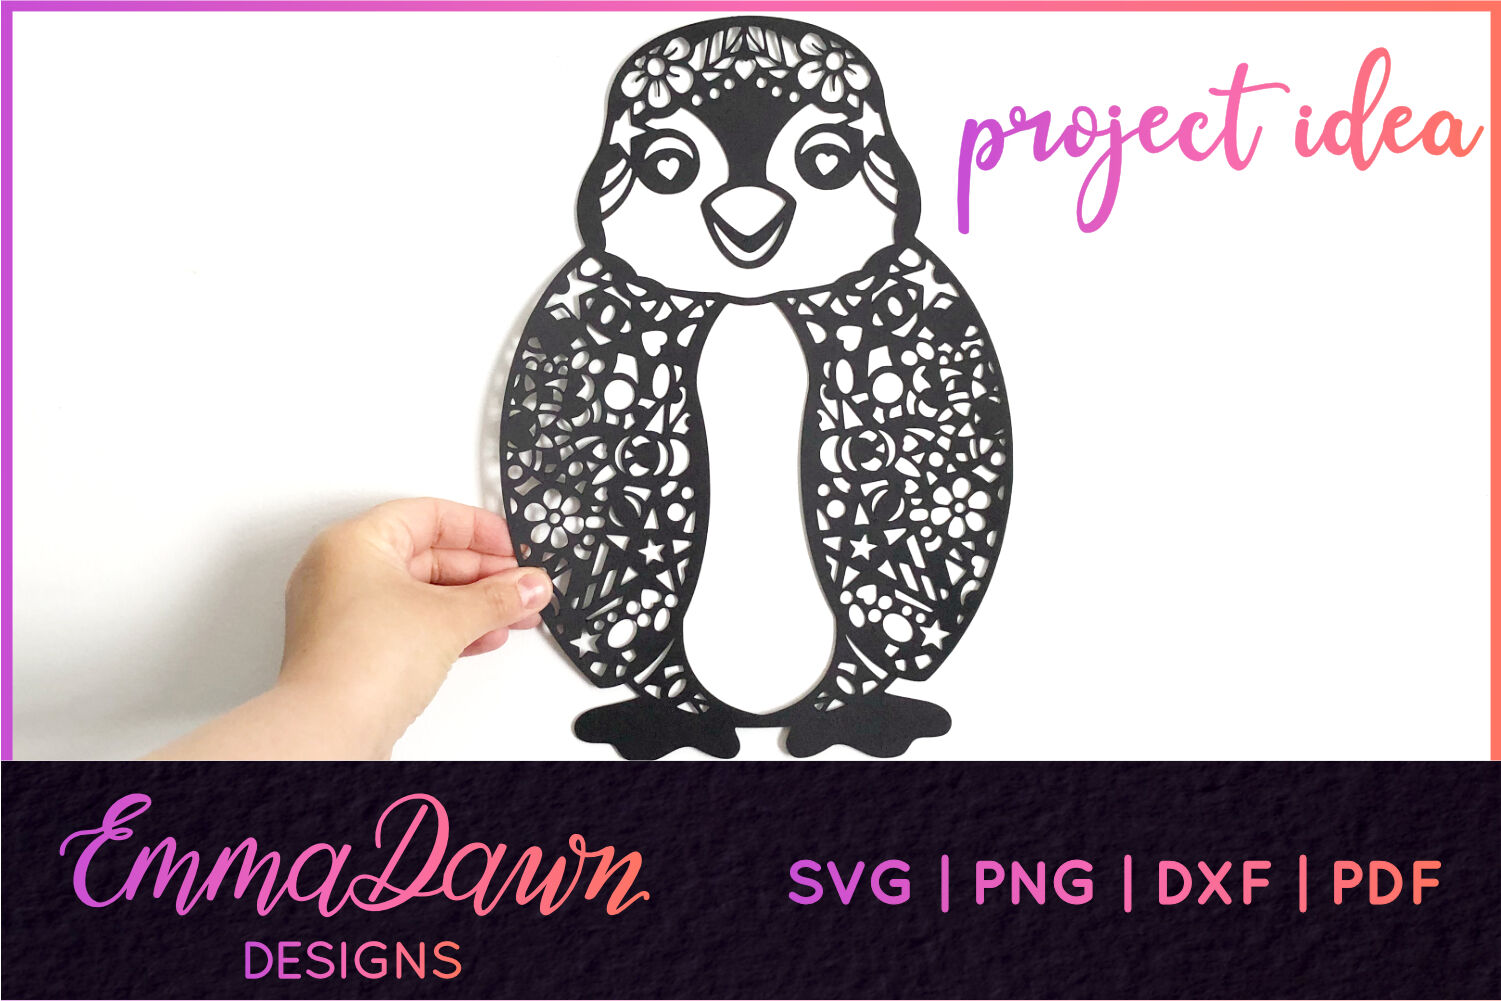 Download Peyton Peter The Penguins Mandala Zentangle 2 Designs By Emma Dawn Designs Thehungryjpeg Com